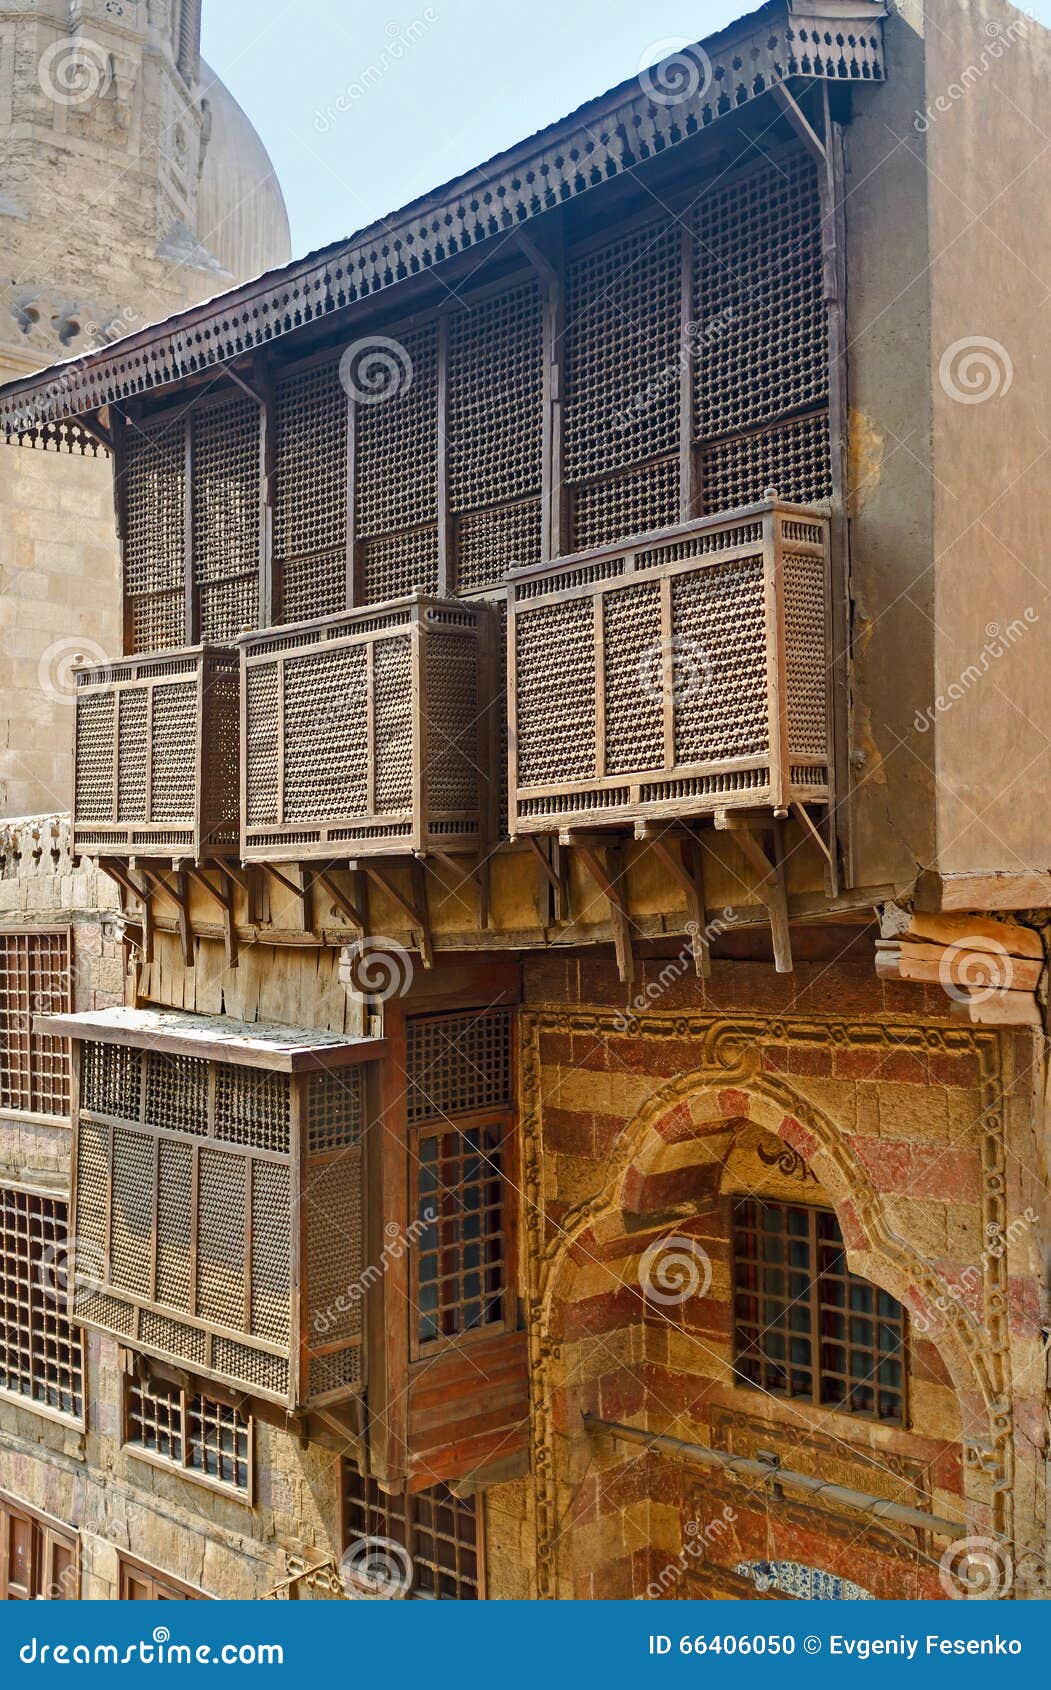 the wooden balcony